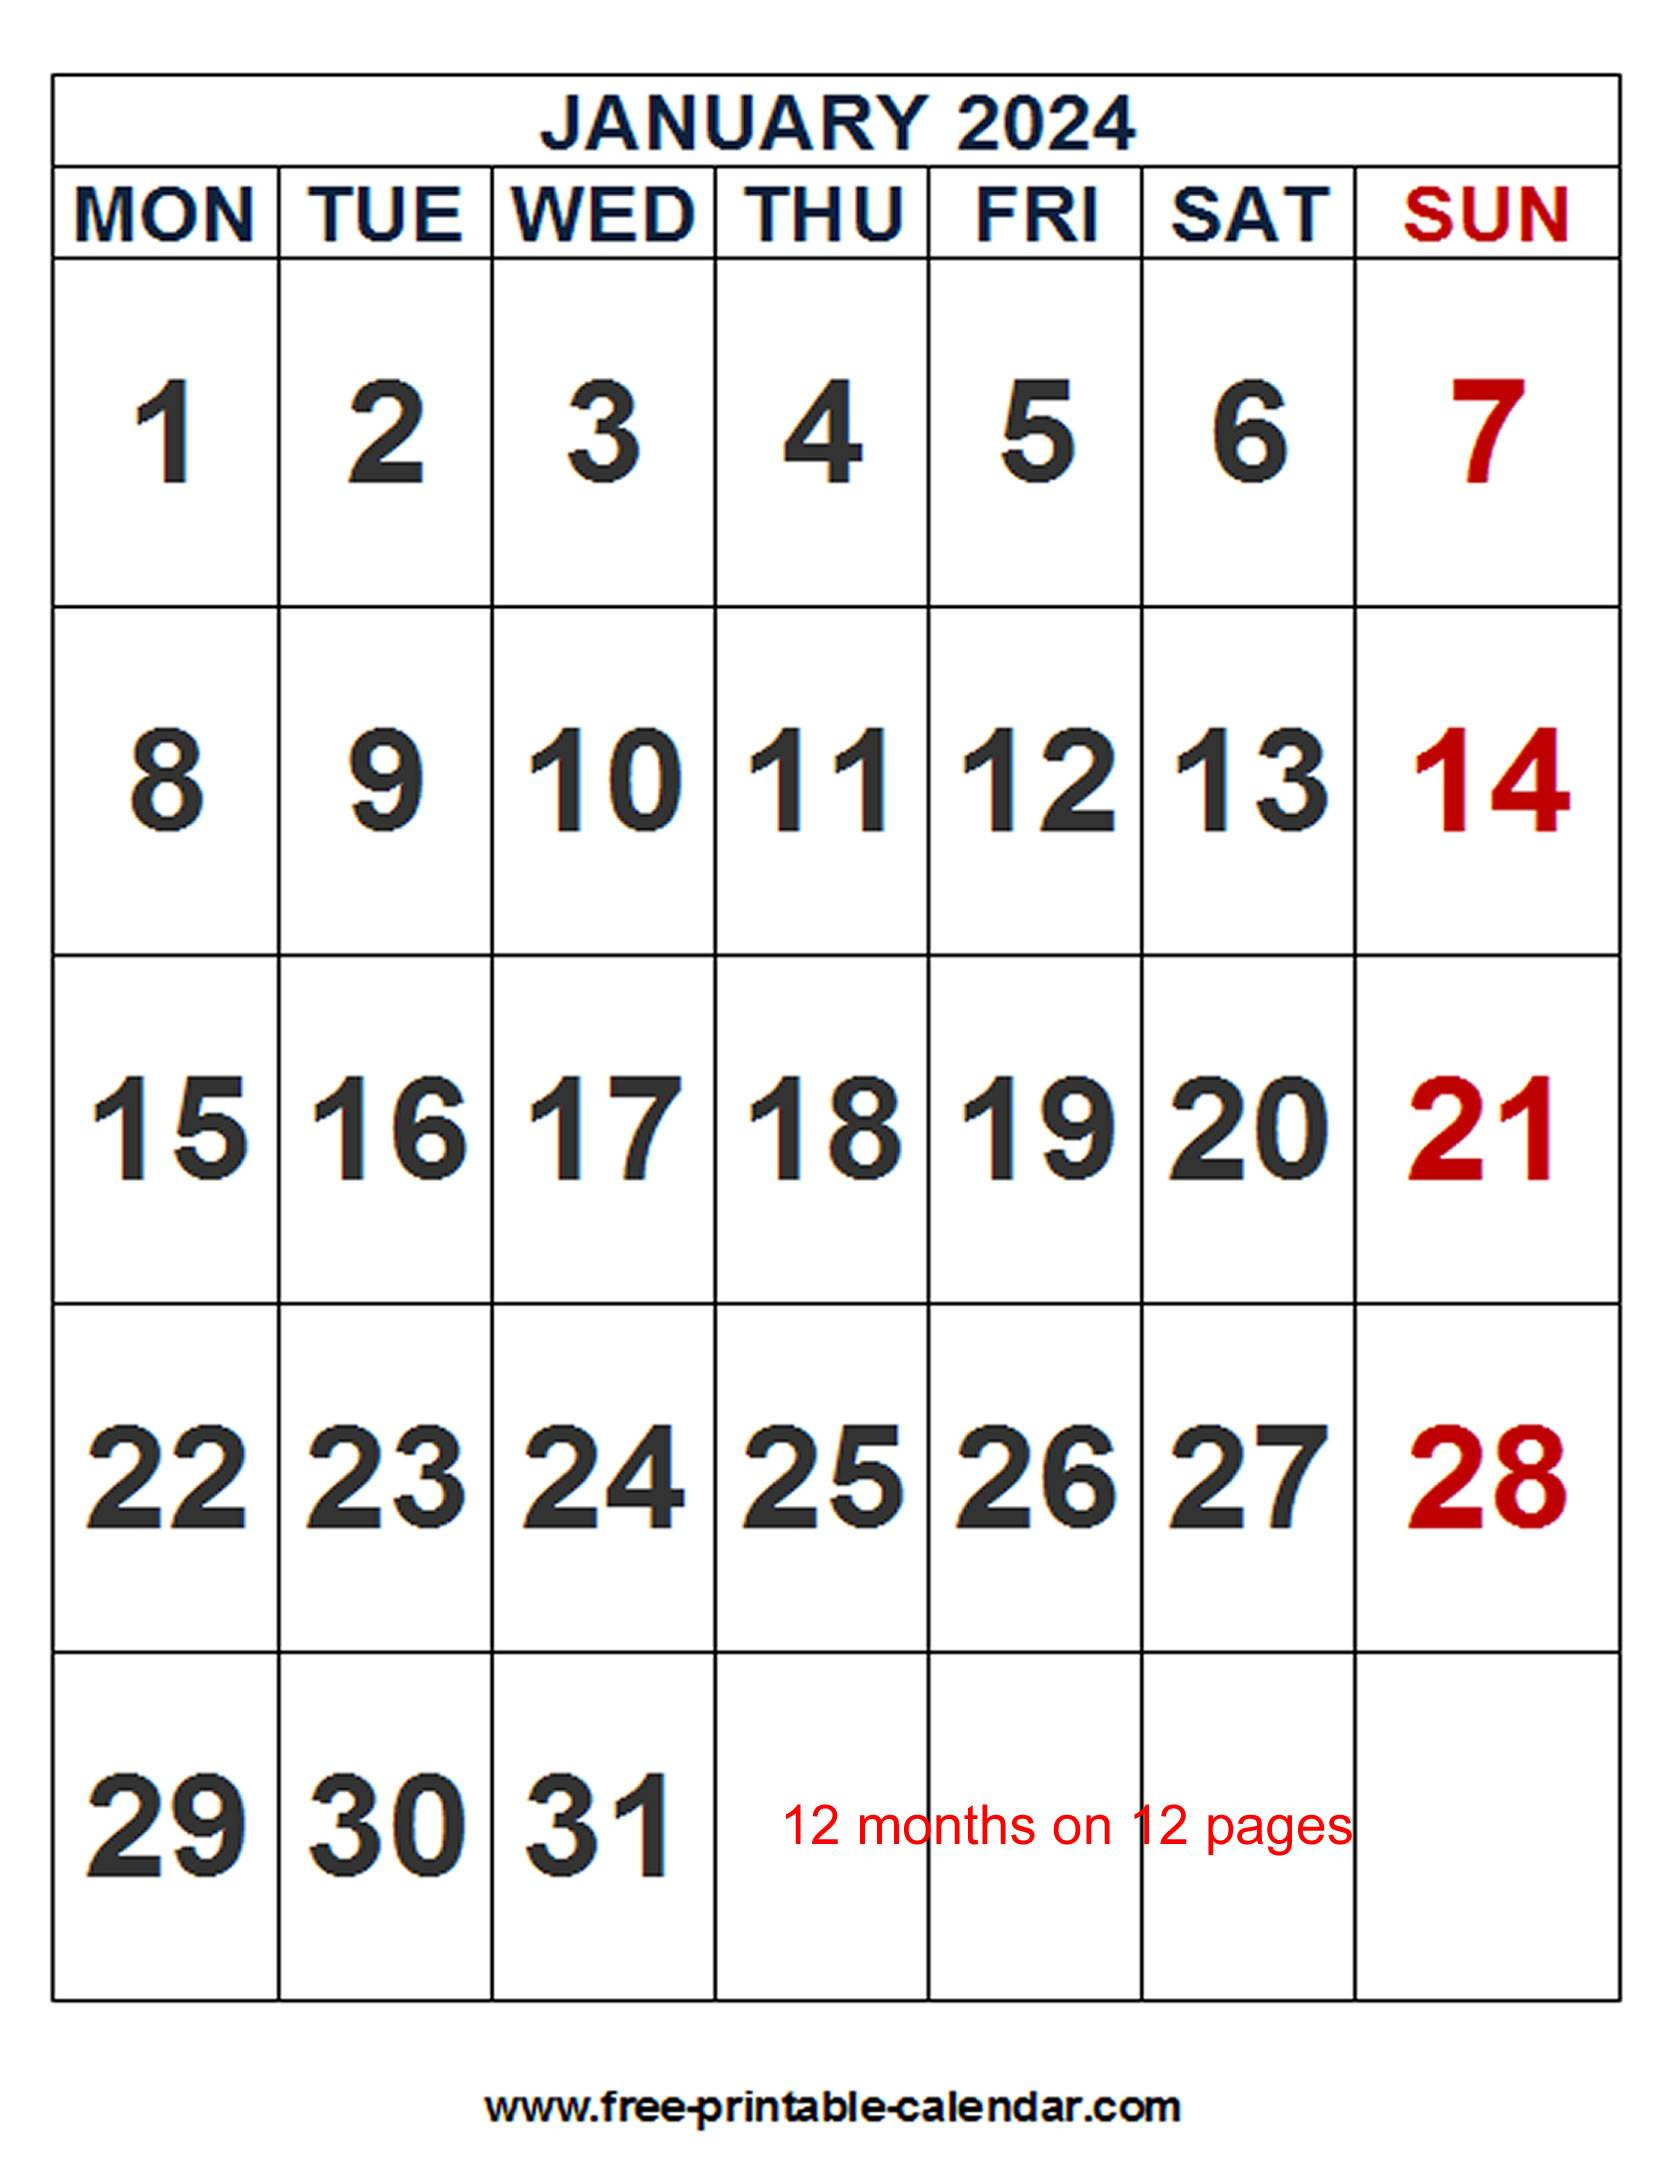 2024 Calendar Word Template - Free-Printable-Calendar throughout Free Printable Calendar 2024 Word Template